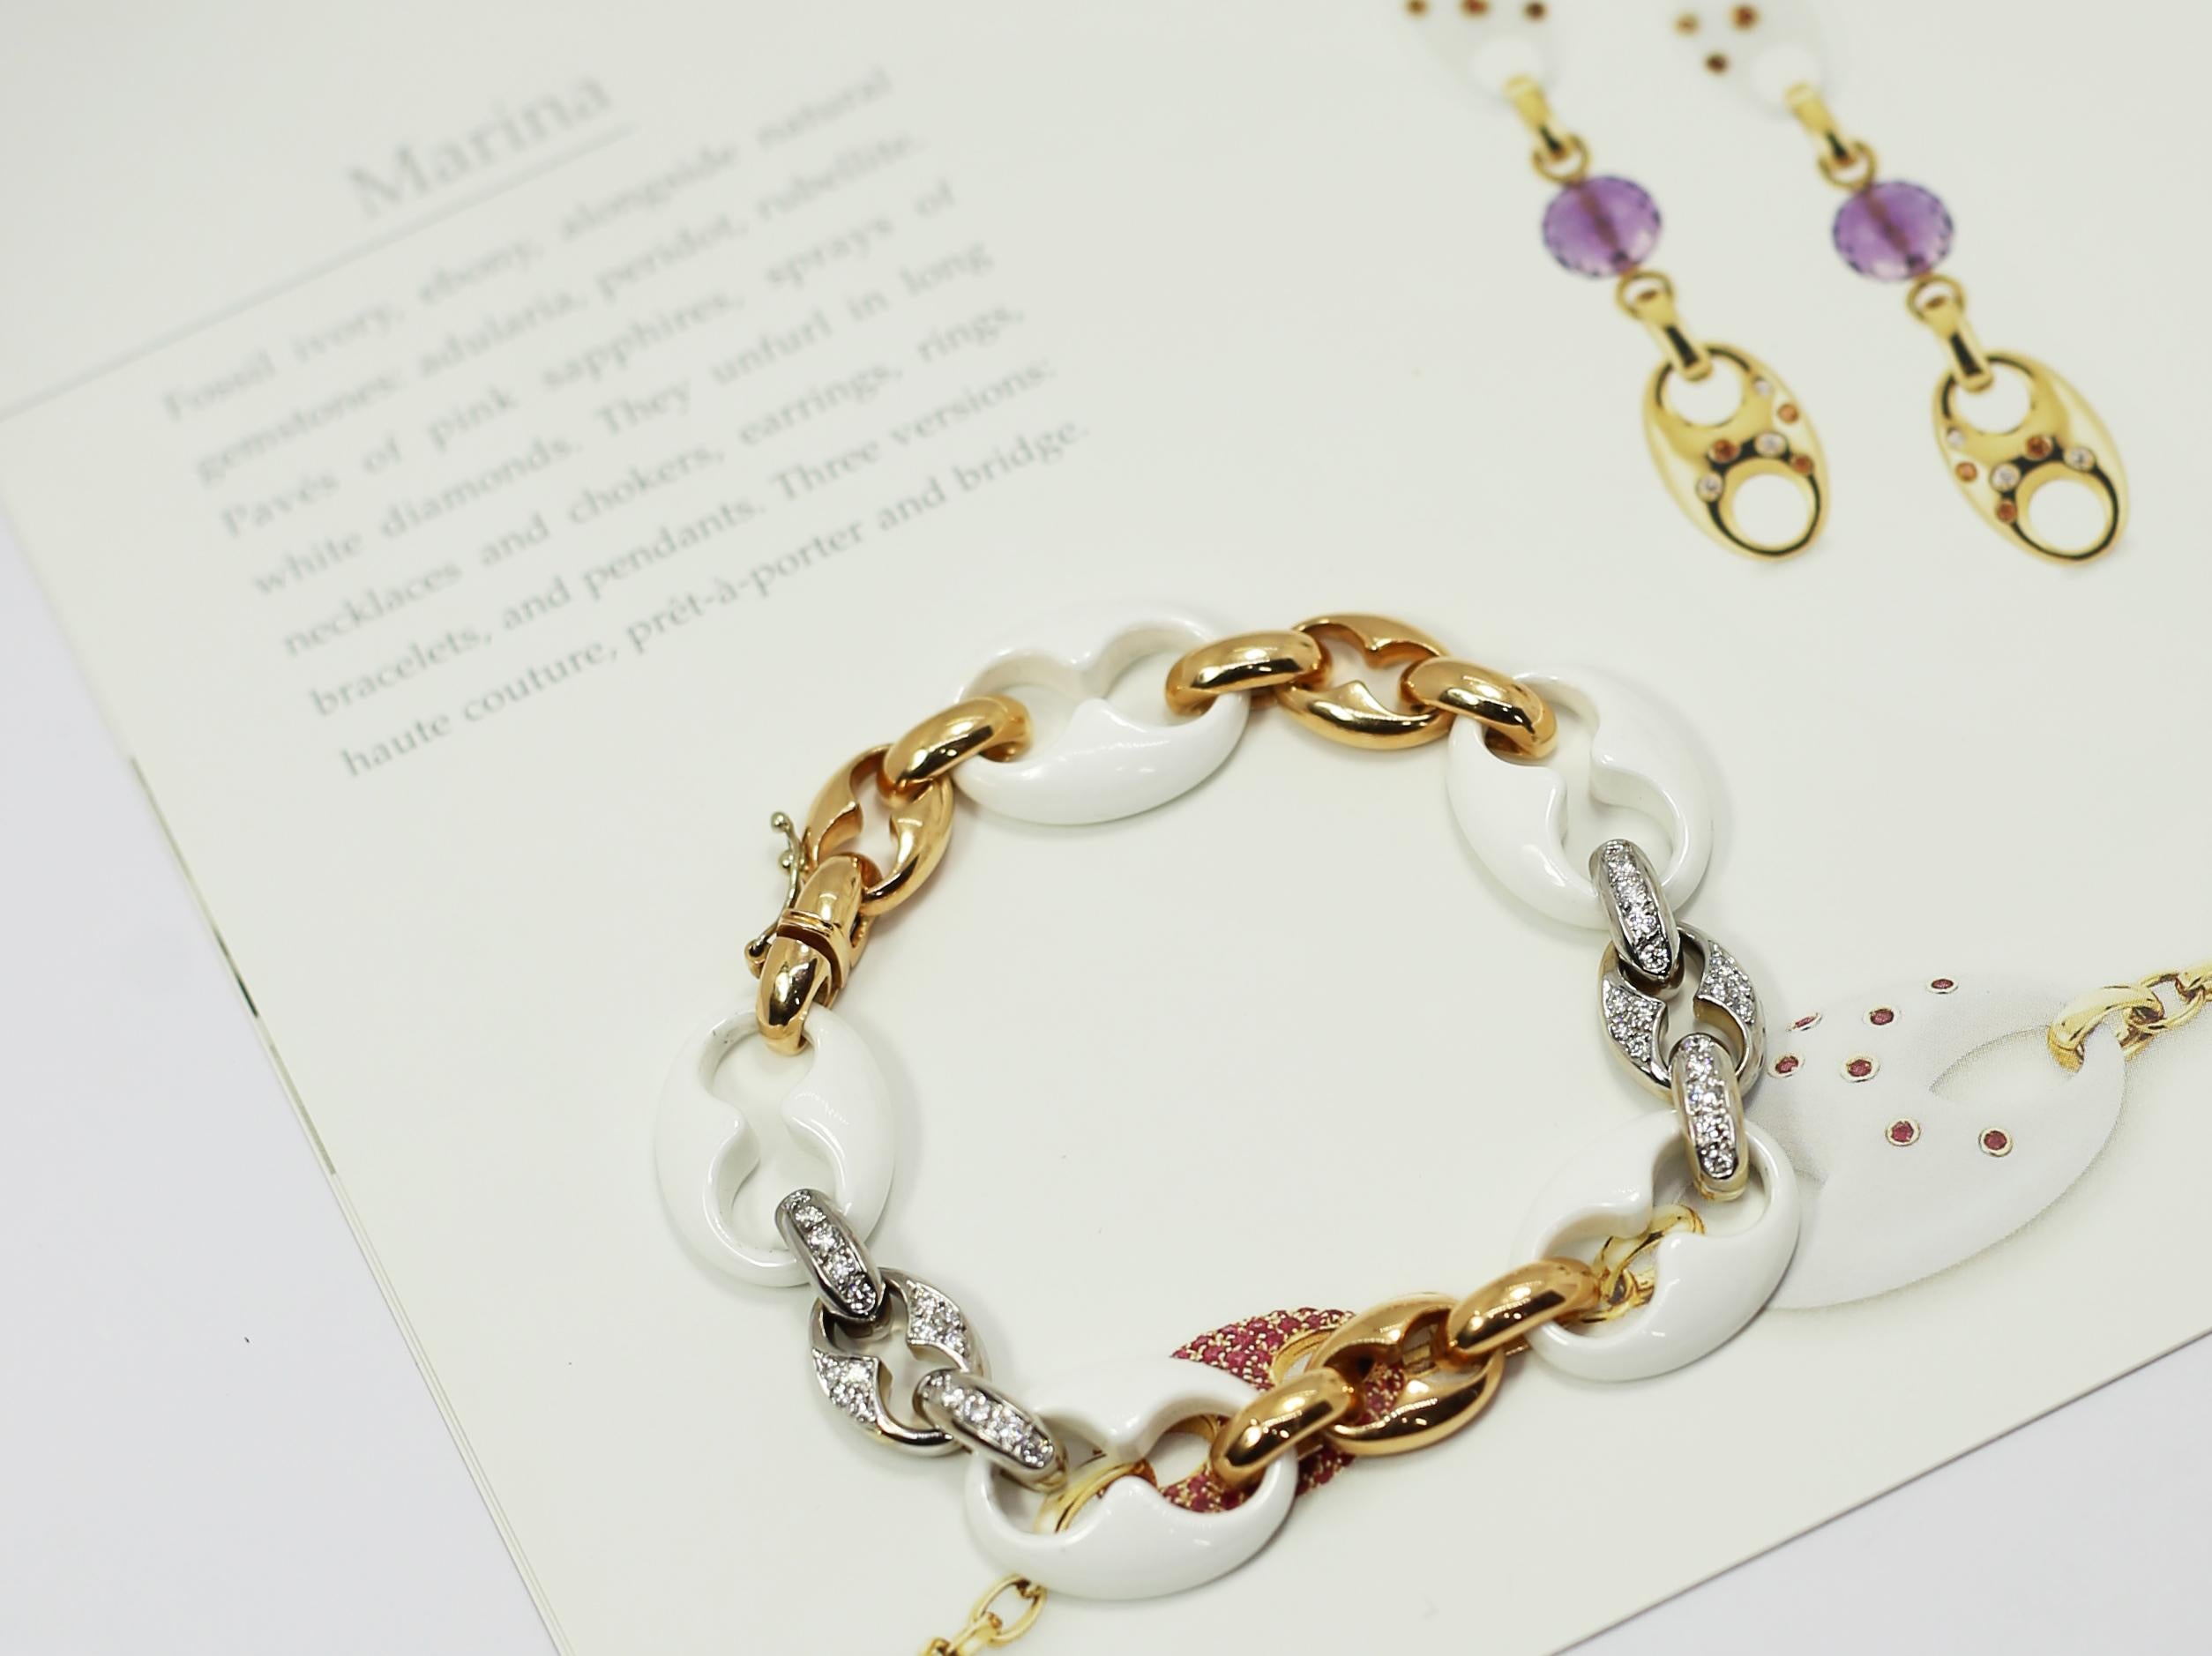 marine chain bracelet